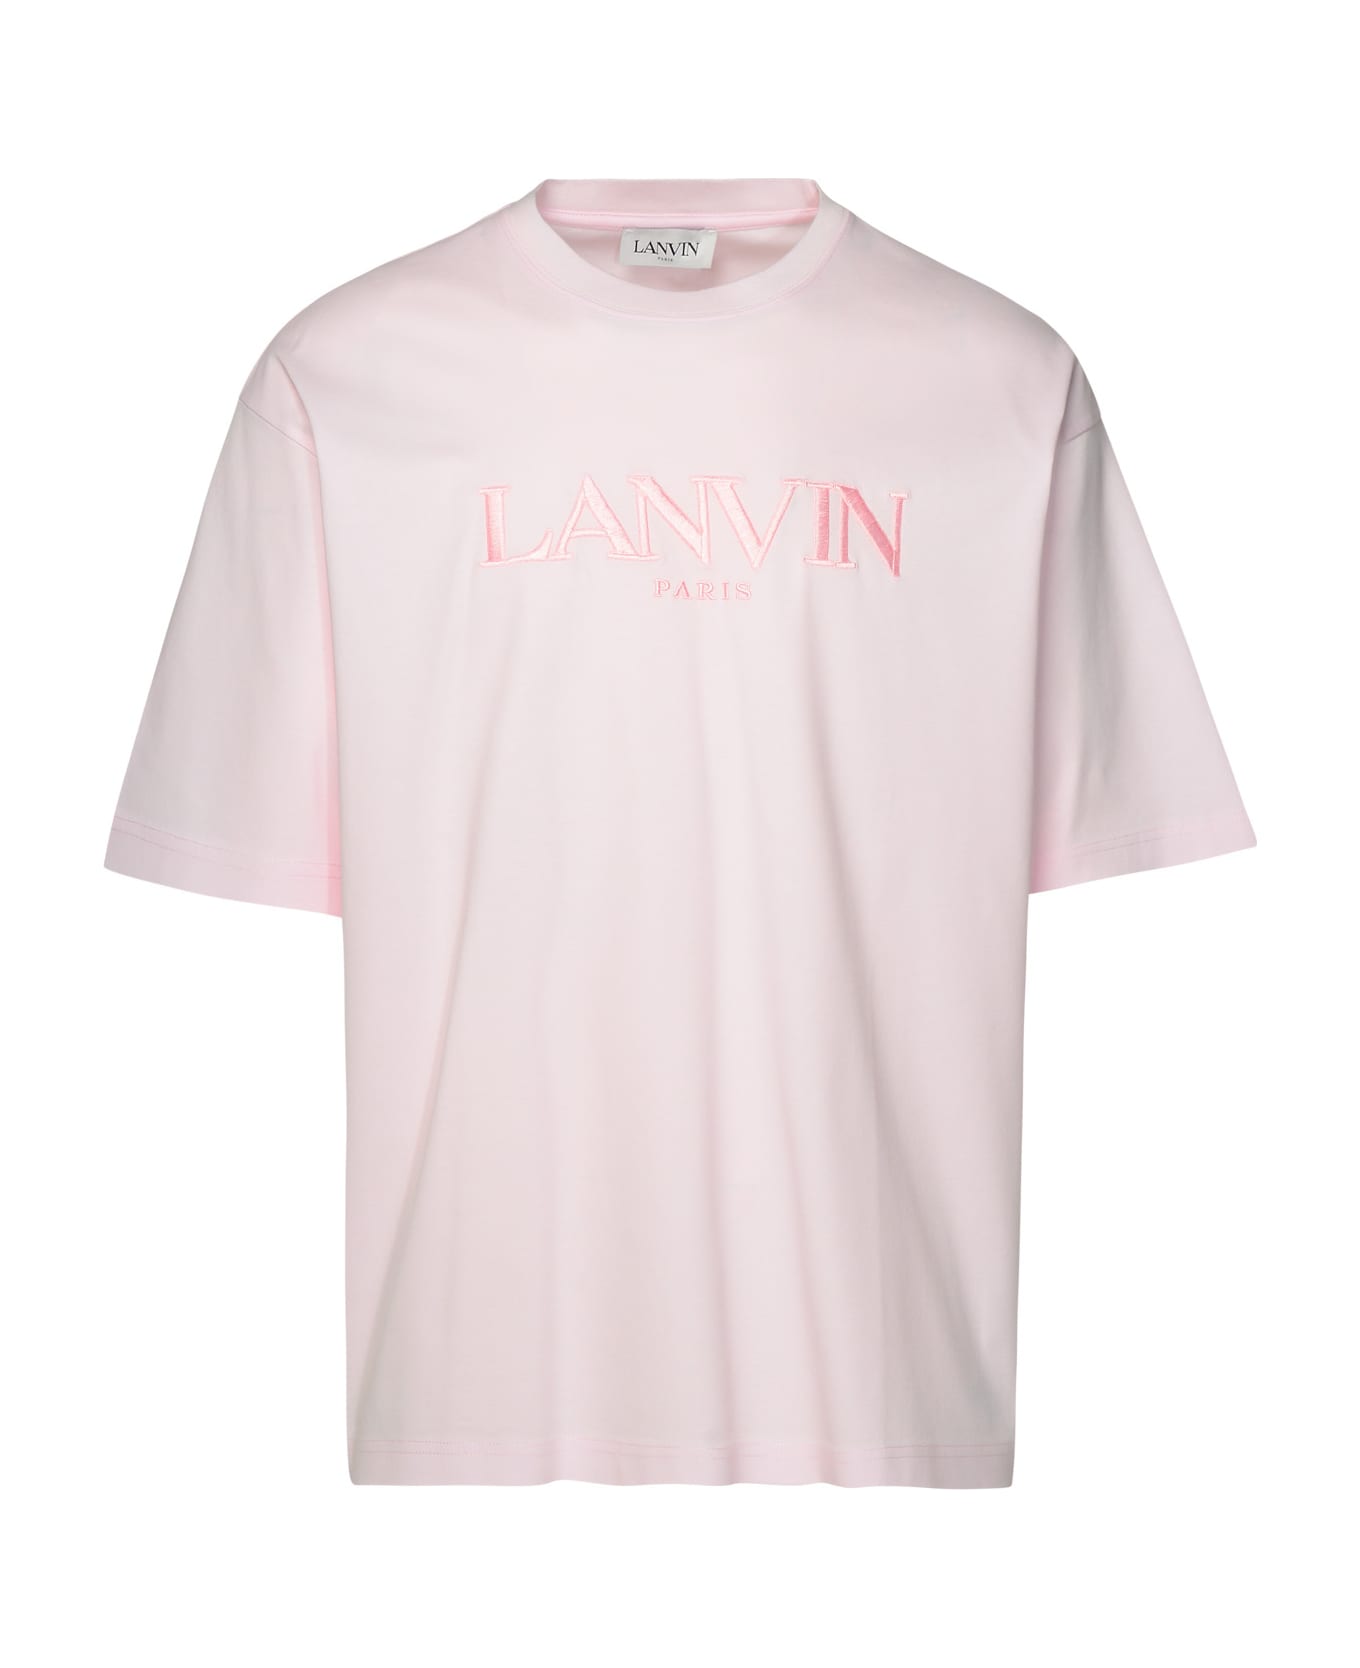 Lanvin Pink Cotton T-shirt